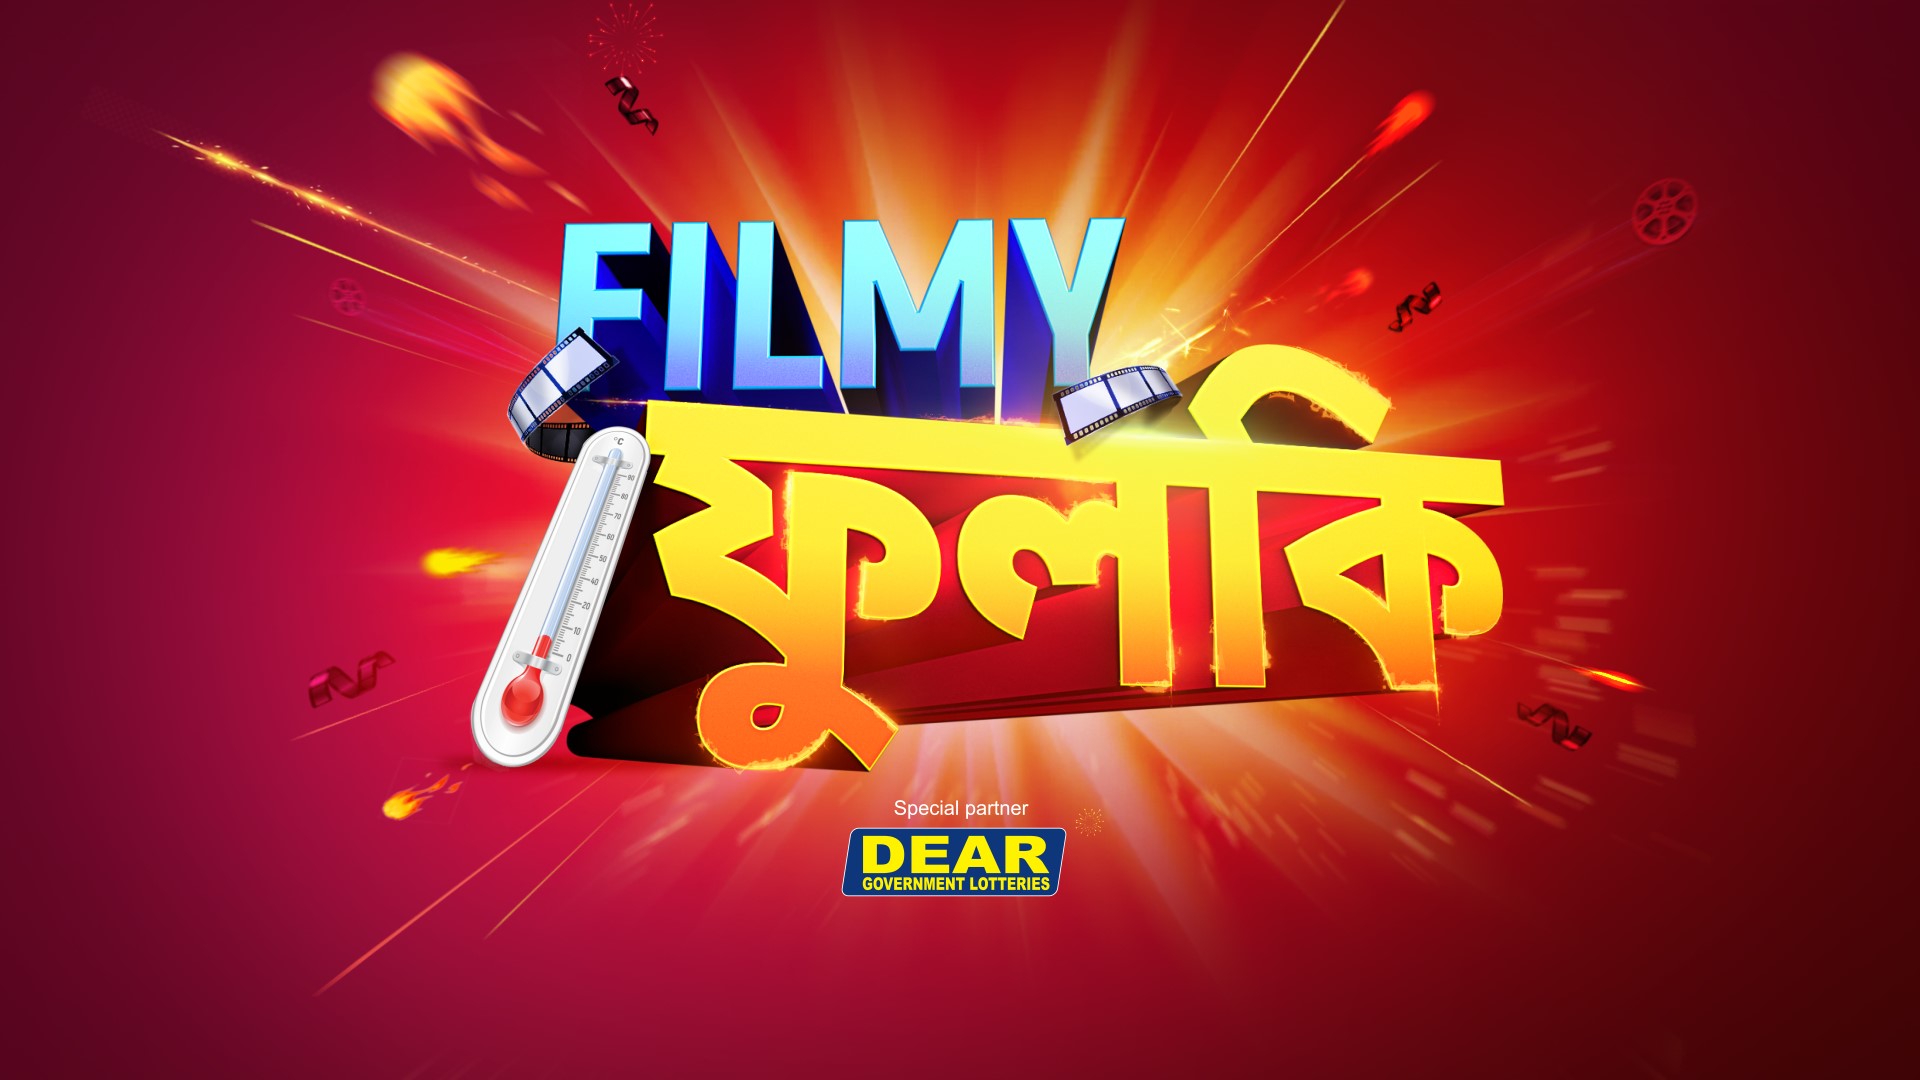 Colors Bangla Cinema's 'Filmy Fulki' Festival: A Resounding Success! 